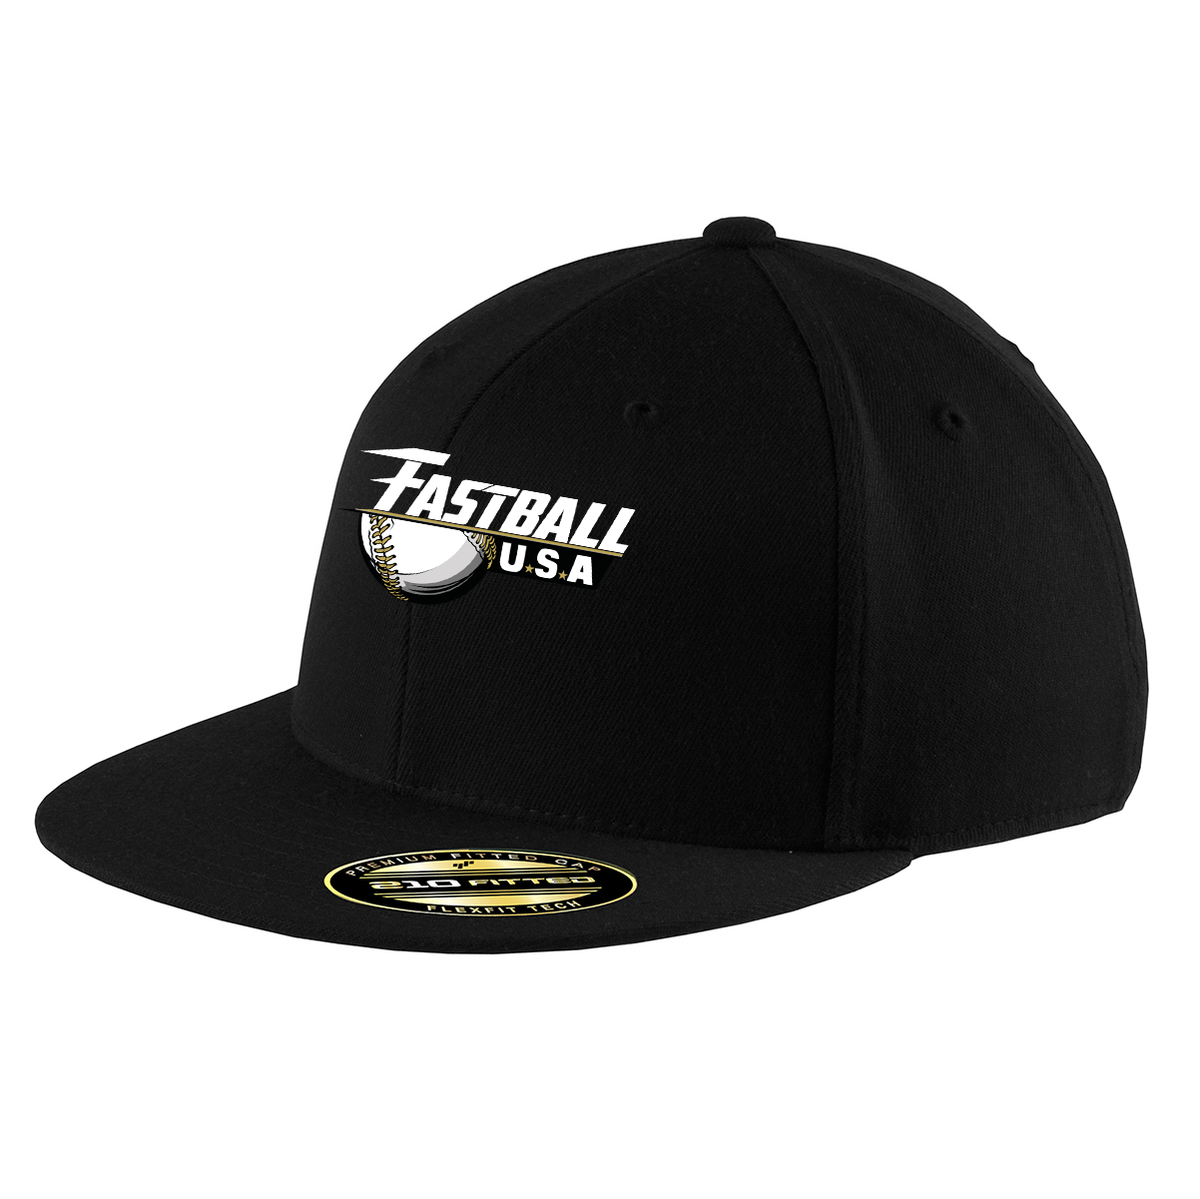 Team Fastball Baseball FlexFit Flat-Brim Hat